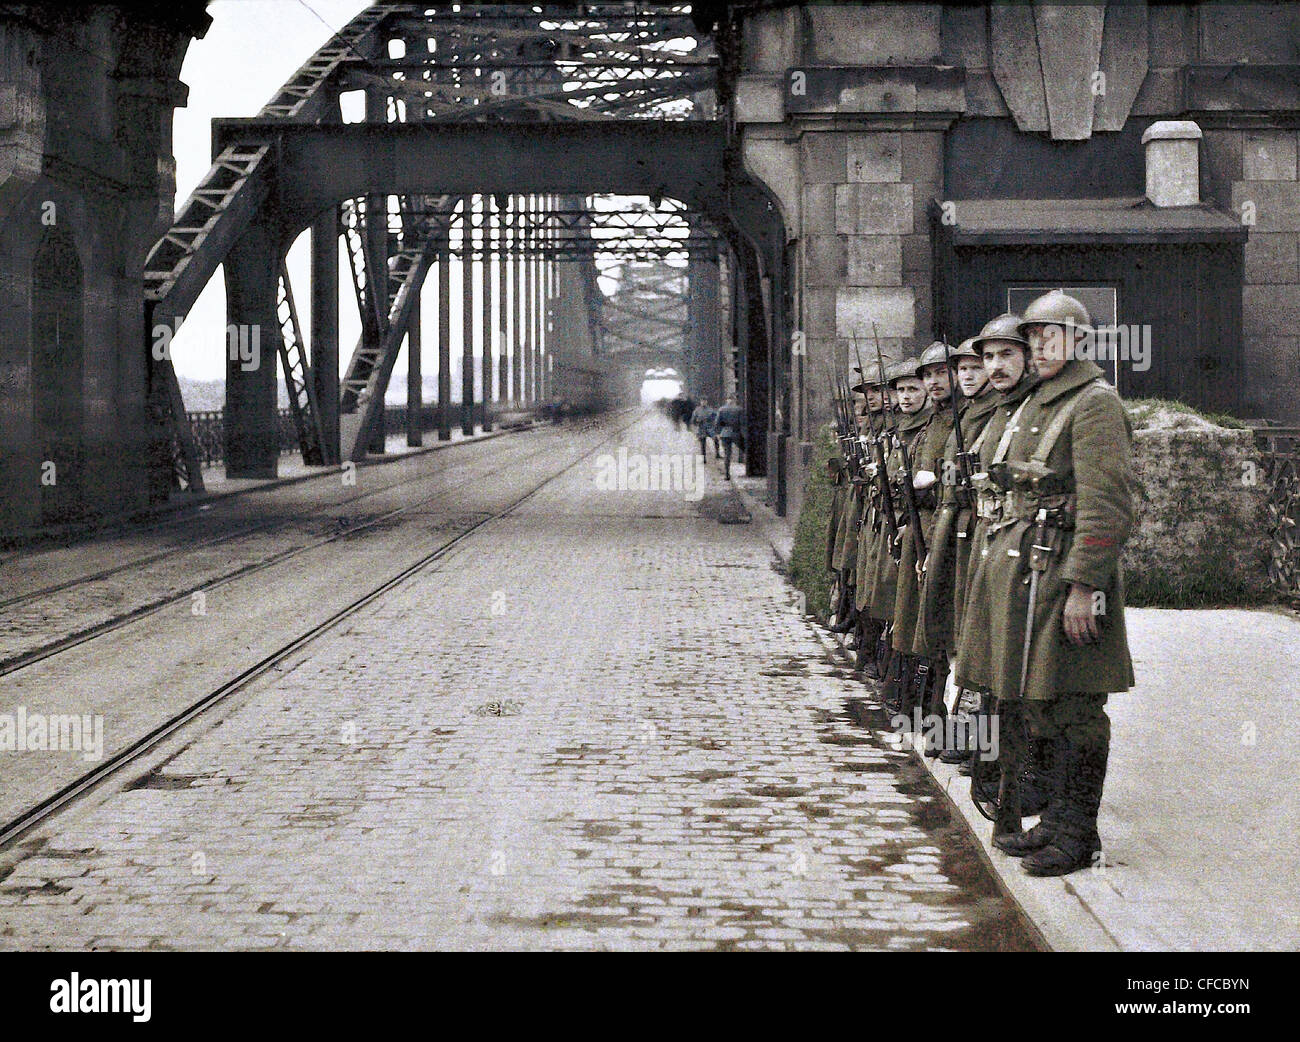 Belgian, soldiers, army, military, guarding, bridge, occupation, Demilitarized, Zone, Rhineland, troops, Germany 1921, Autochrom Stock Photo